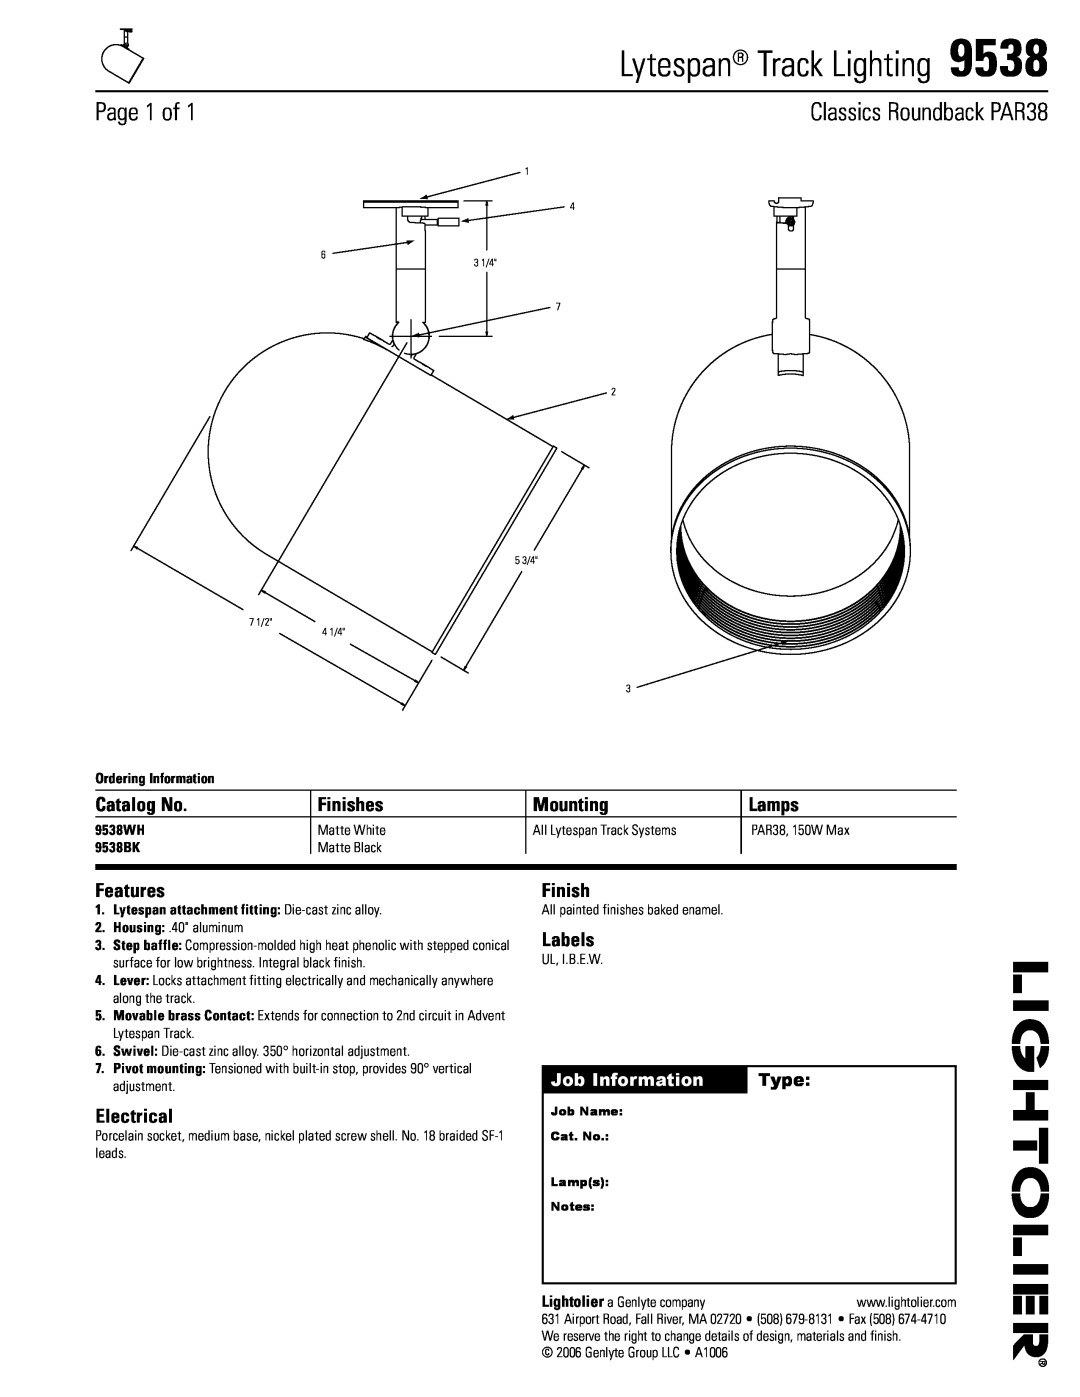 Lightolier 9538 manual Lytespan Track Lighting, Page of, Classics Roundback PAR38, Catalog No, Finishes, Mounting, Lamps 